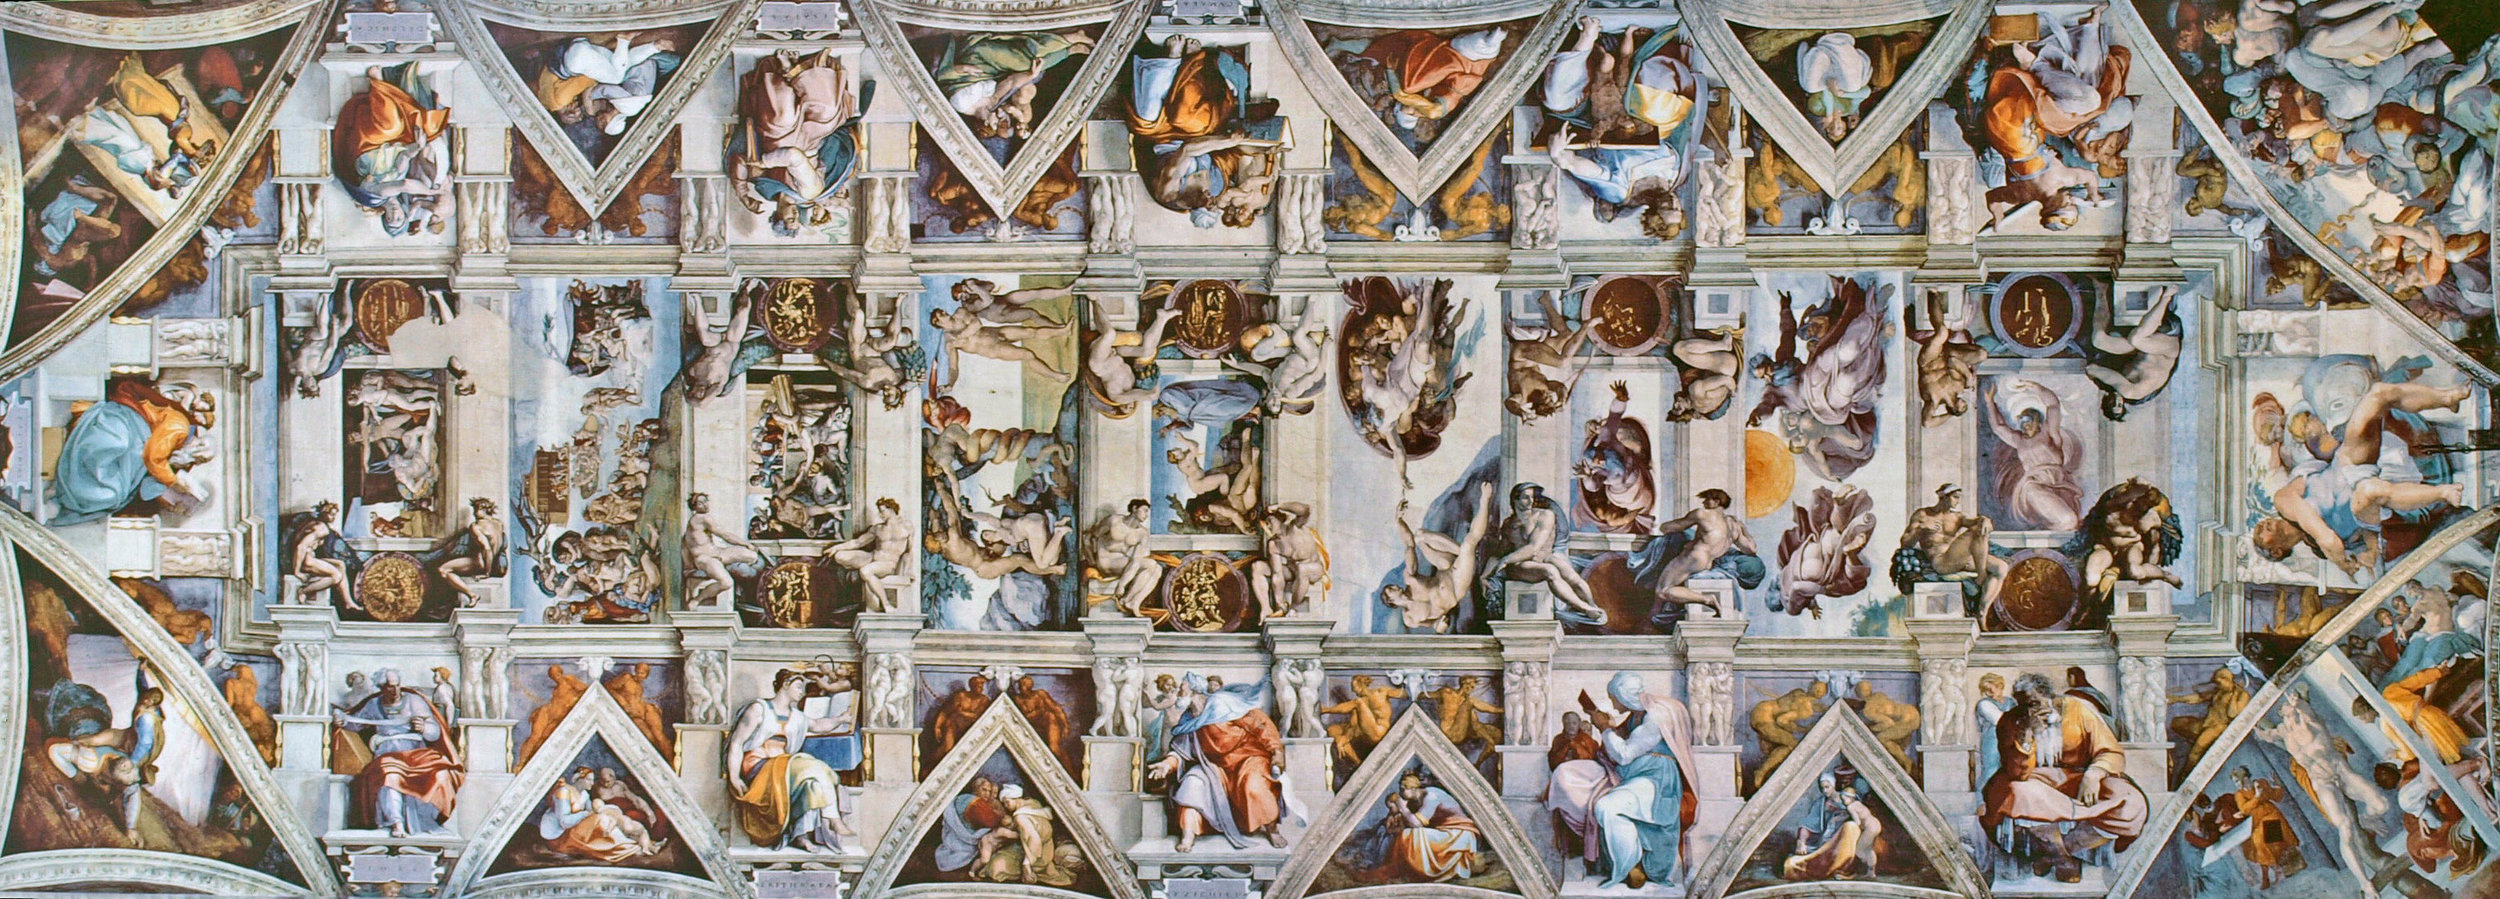 Michelangelo's Sistine Chapel Ceiling, 1508-1512